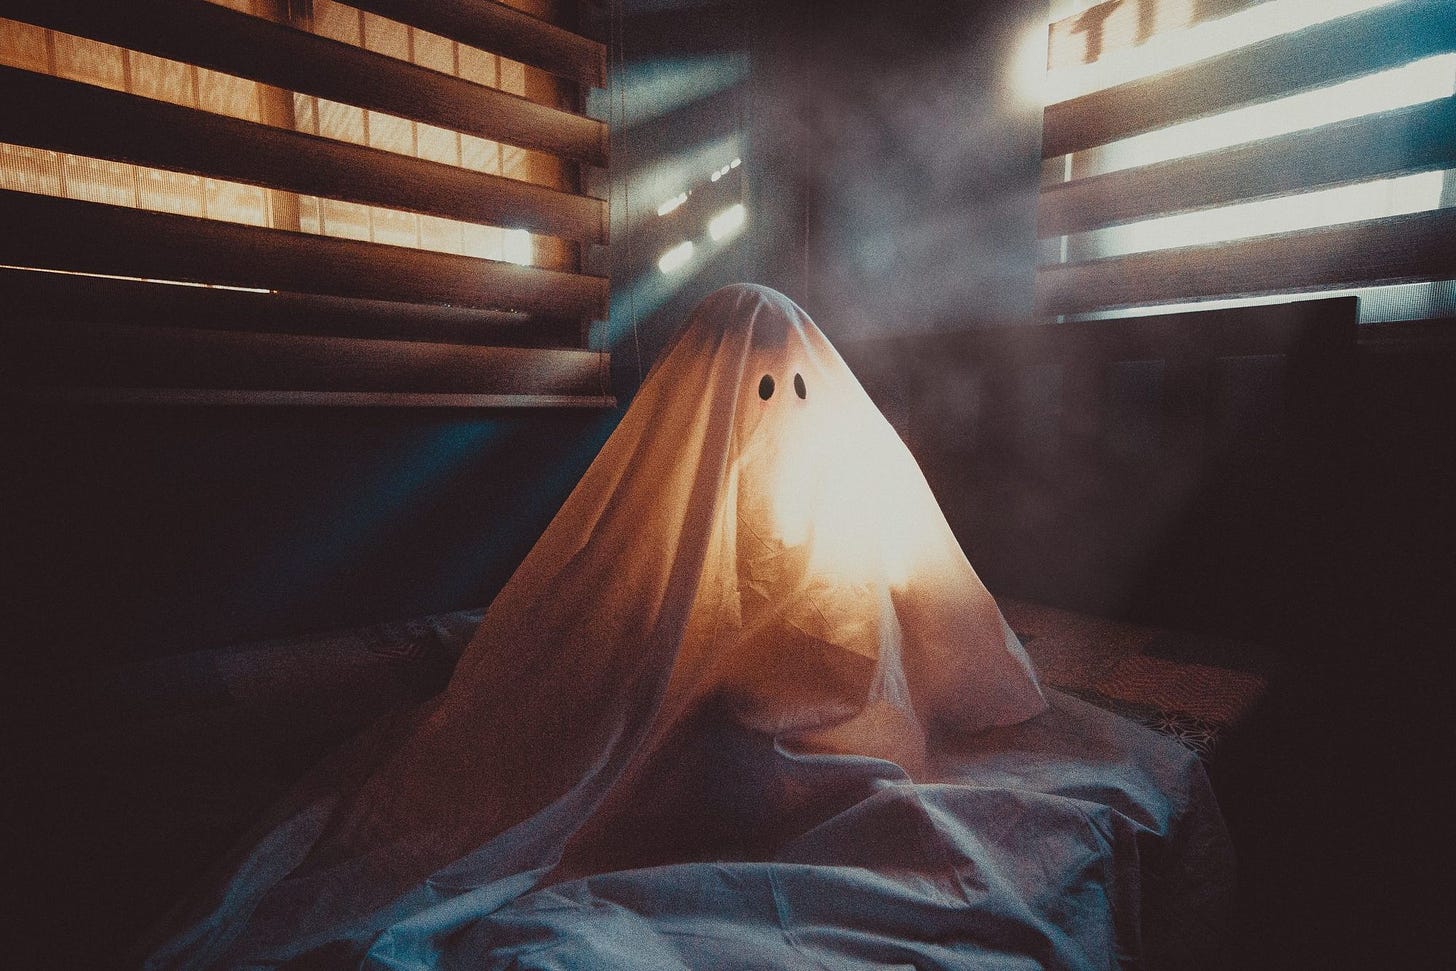 ghost hiding under a blanket in a dark room